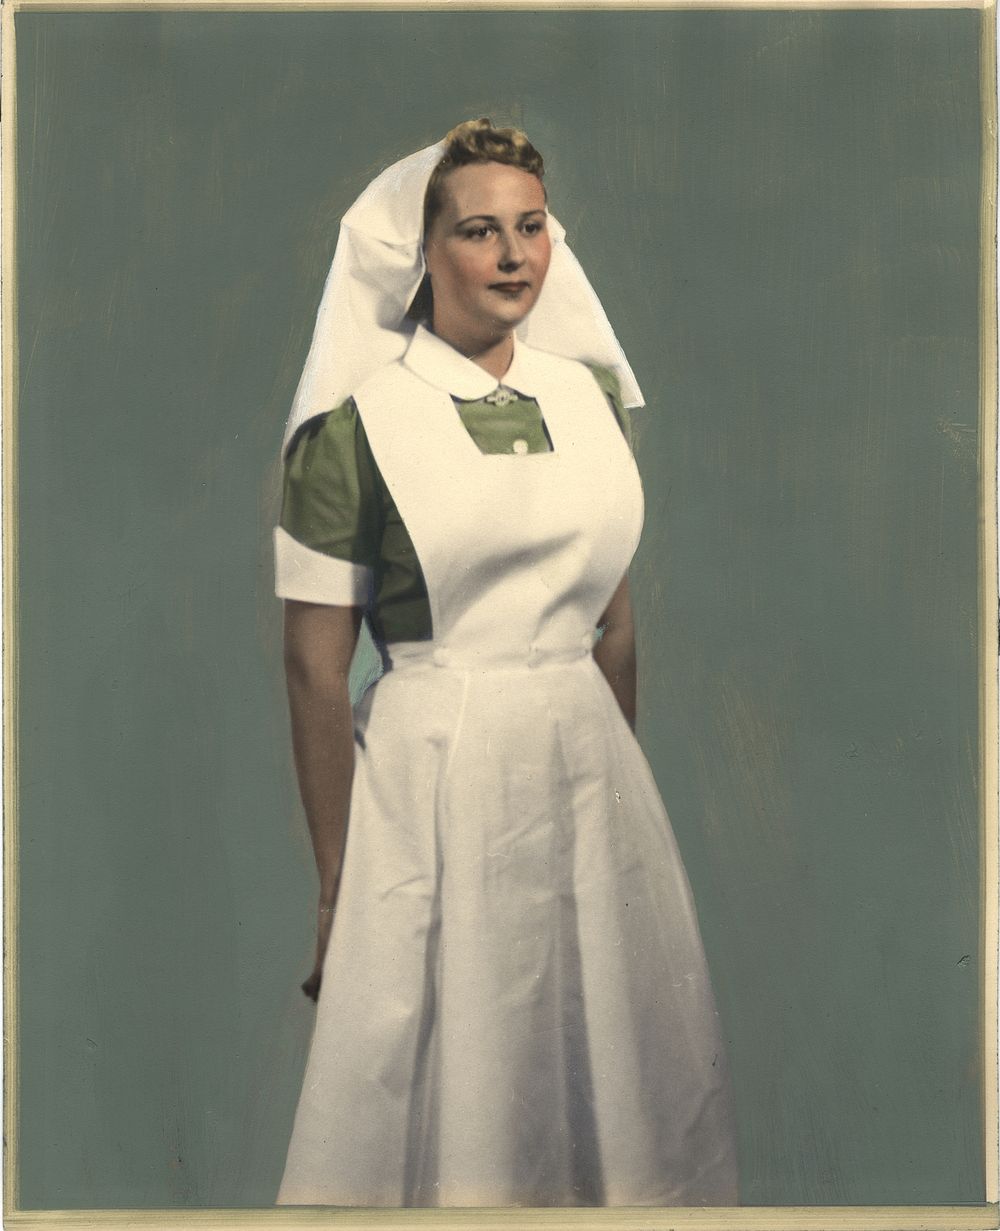 Nurse wearing Uniform. Original public domain image from Flickr